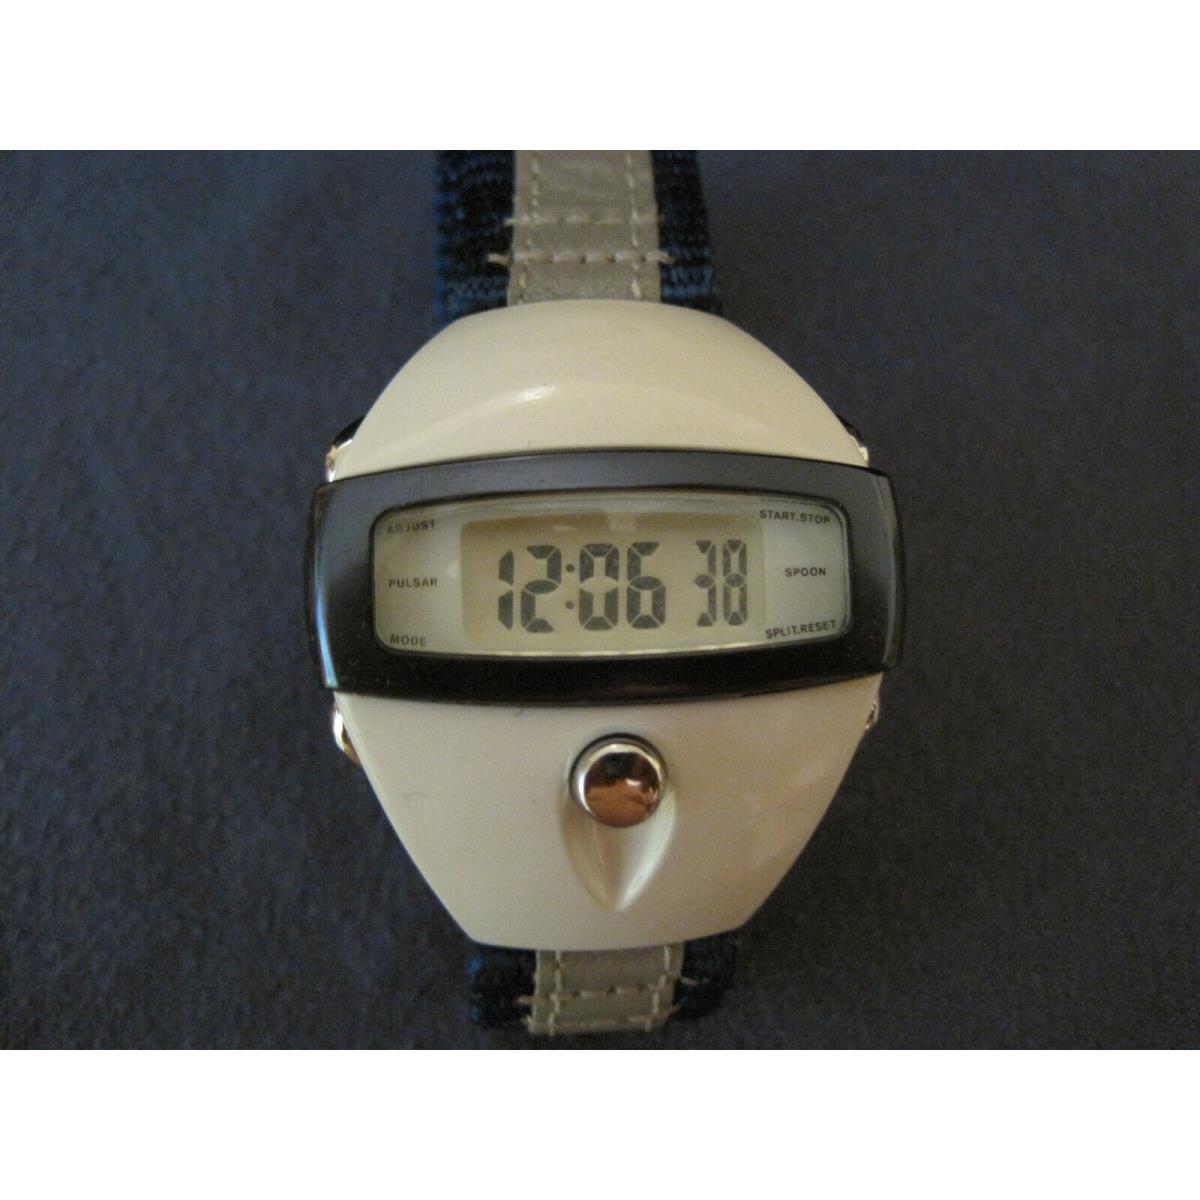 Bx 110 Mans Pulsar Spoon Sport Chronograph Watch